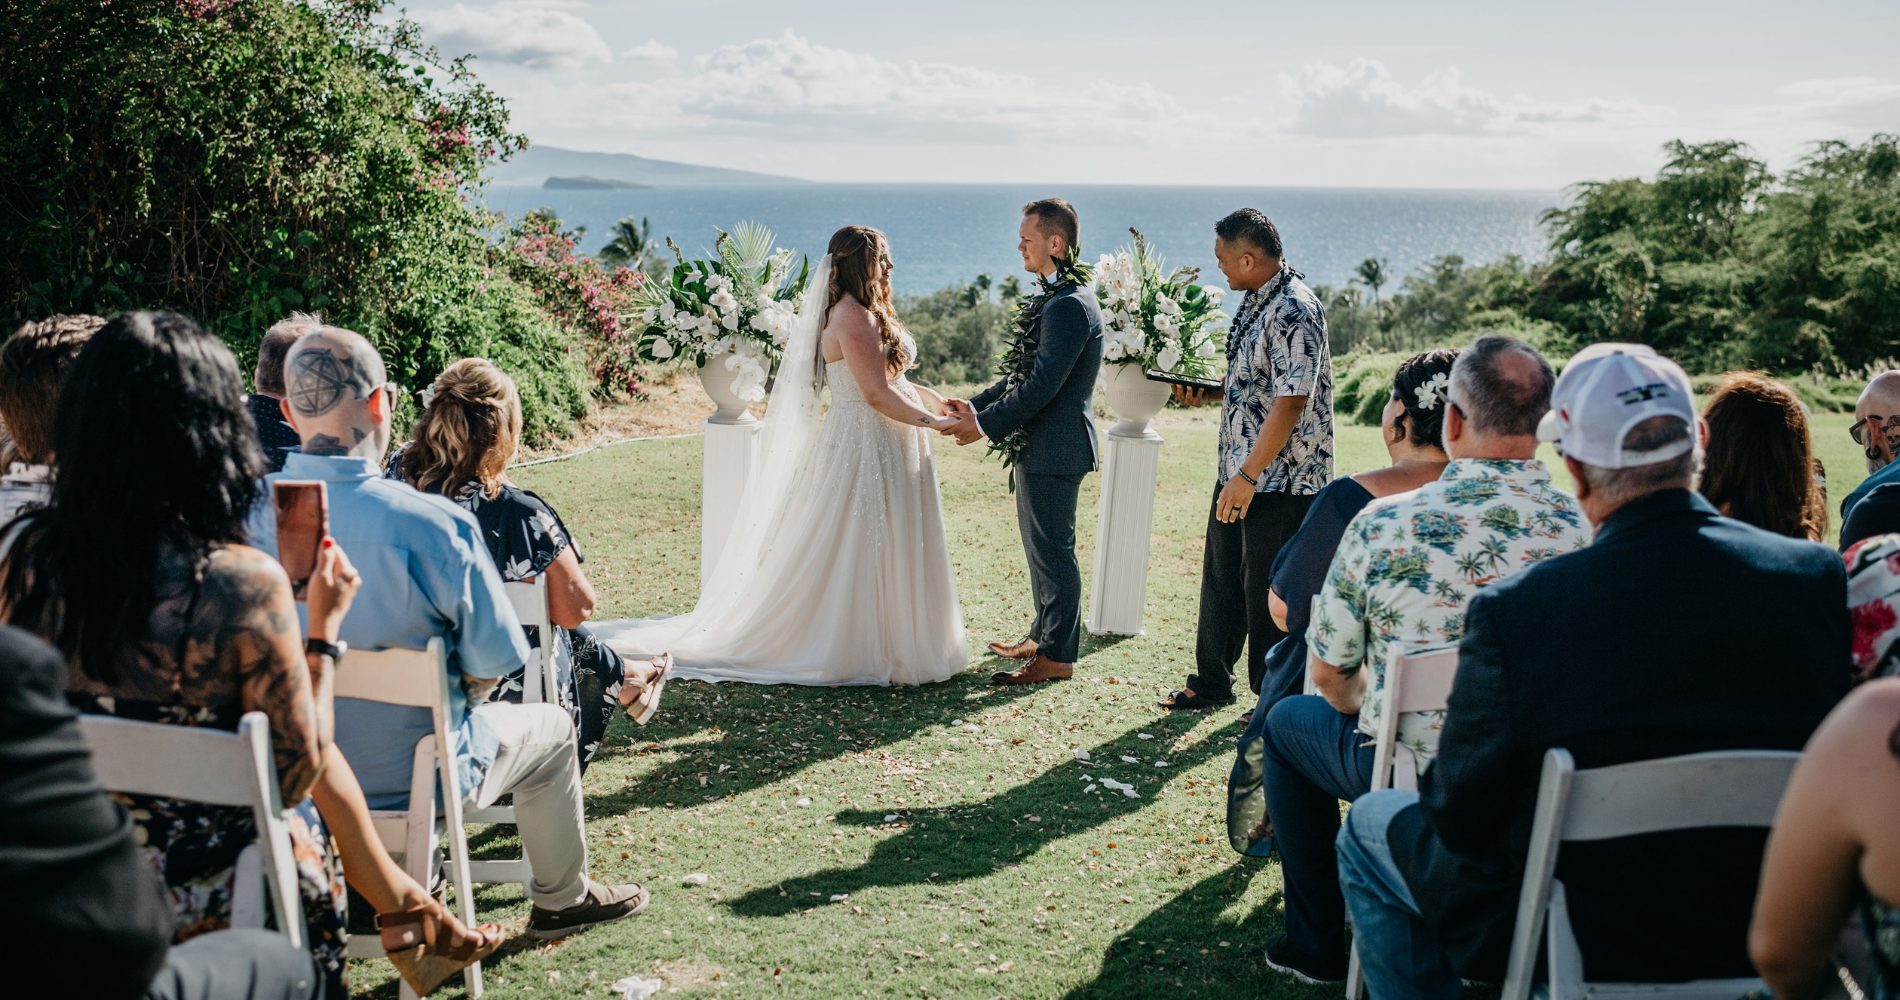 Bride and groom wedding ceremony in hawaii